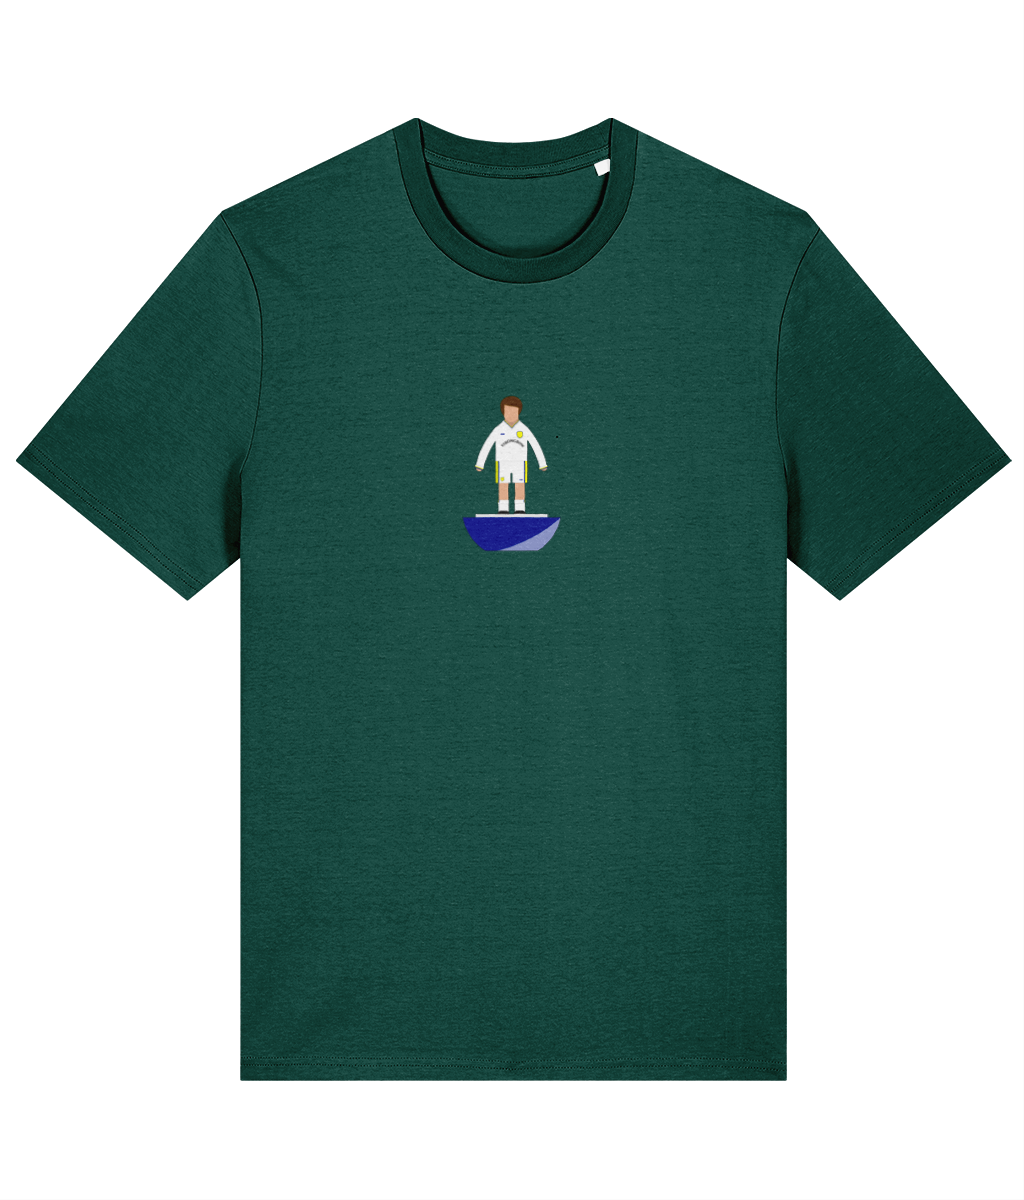 Football Kits 'Leeds 2000' Unisex T-Shirt